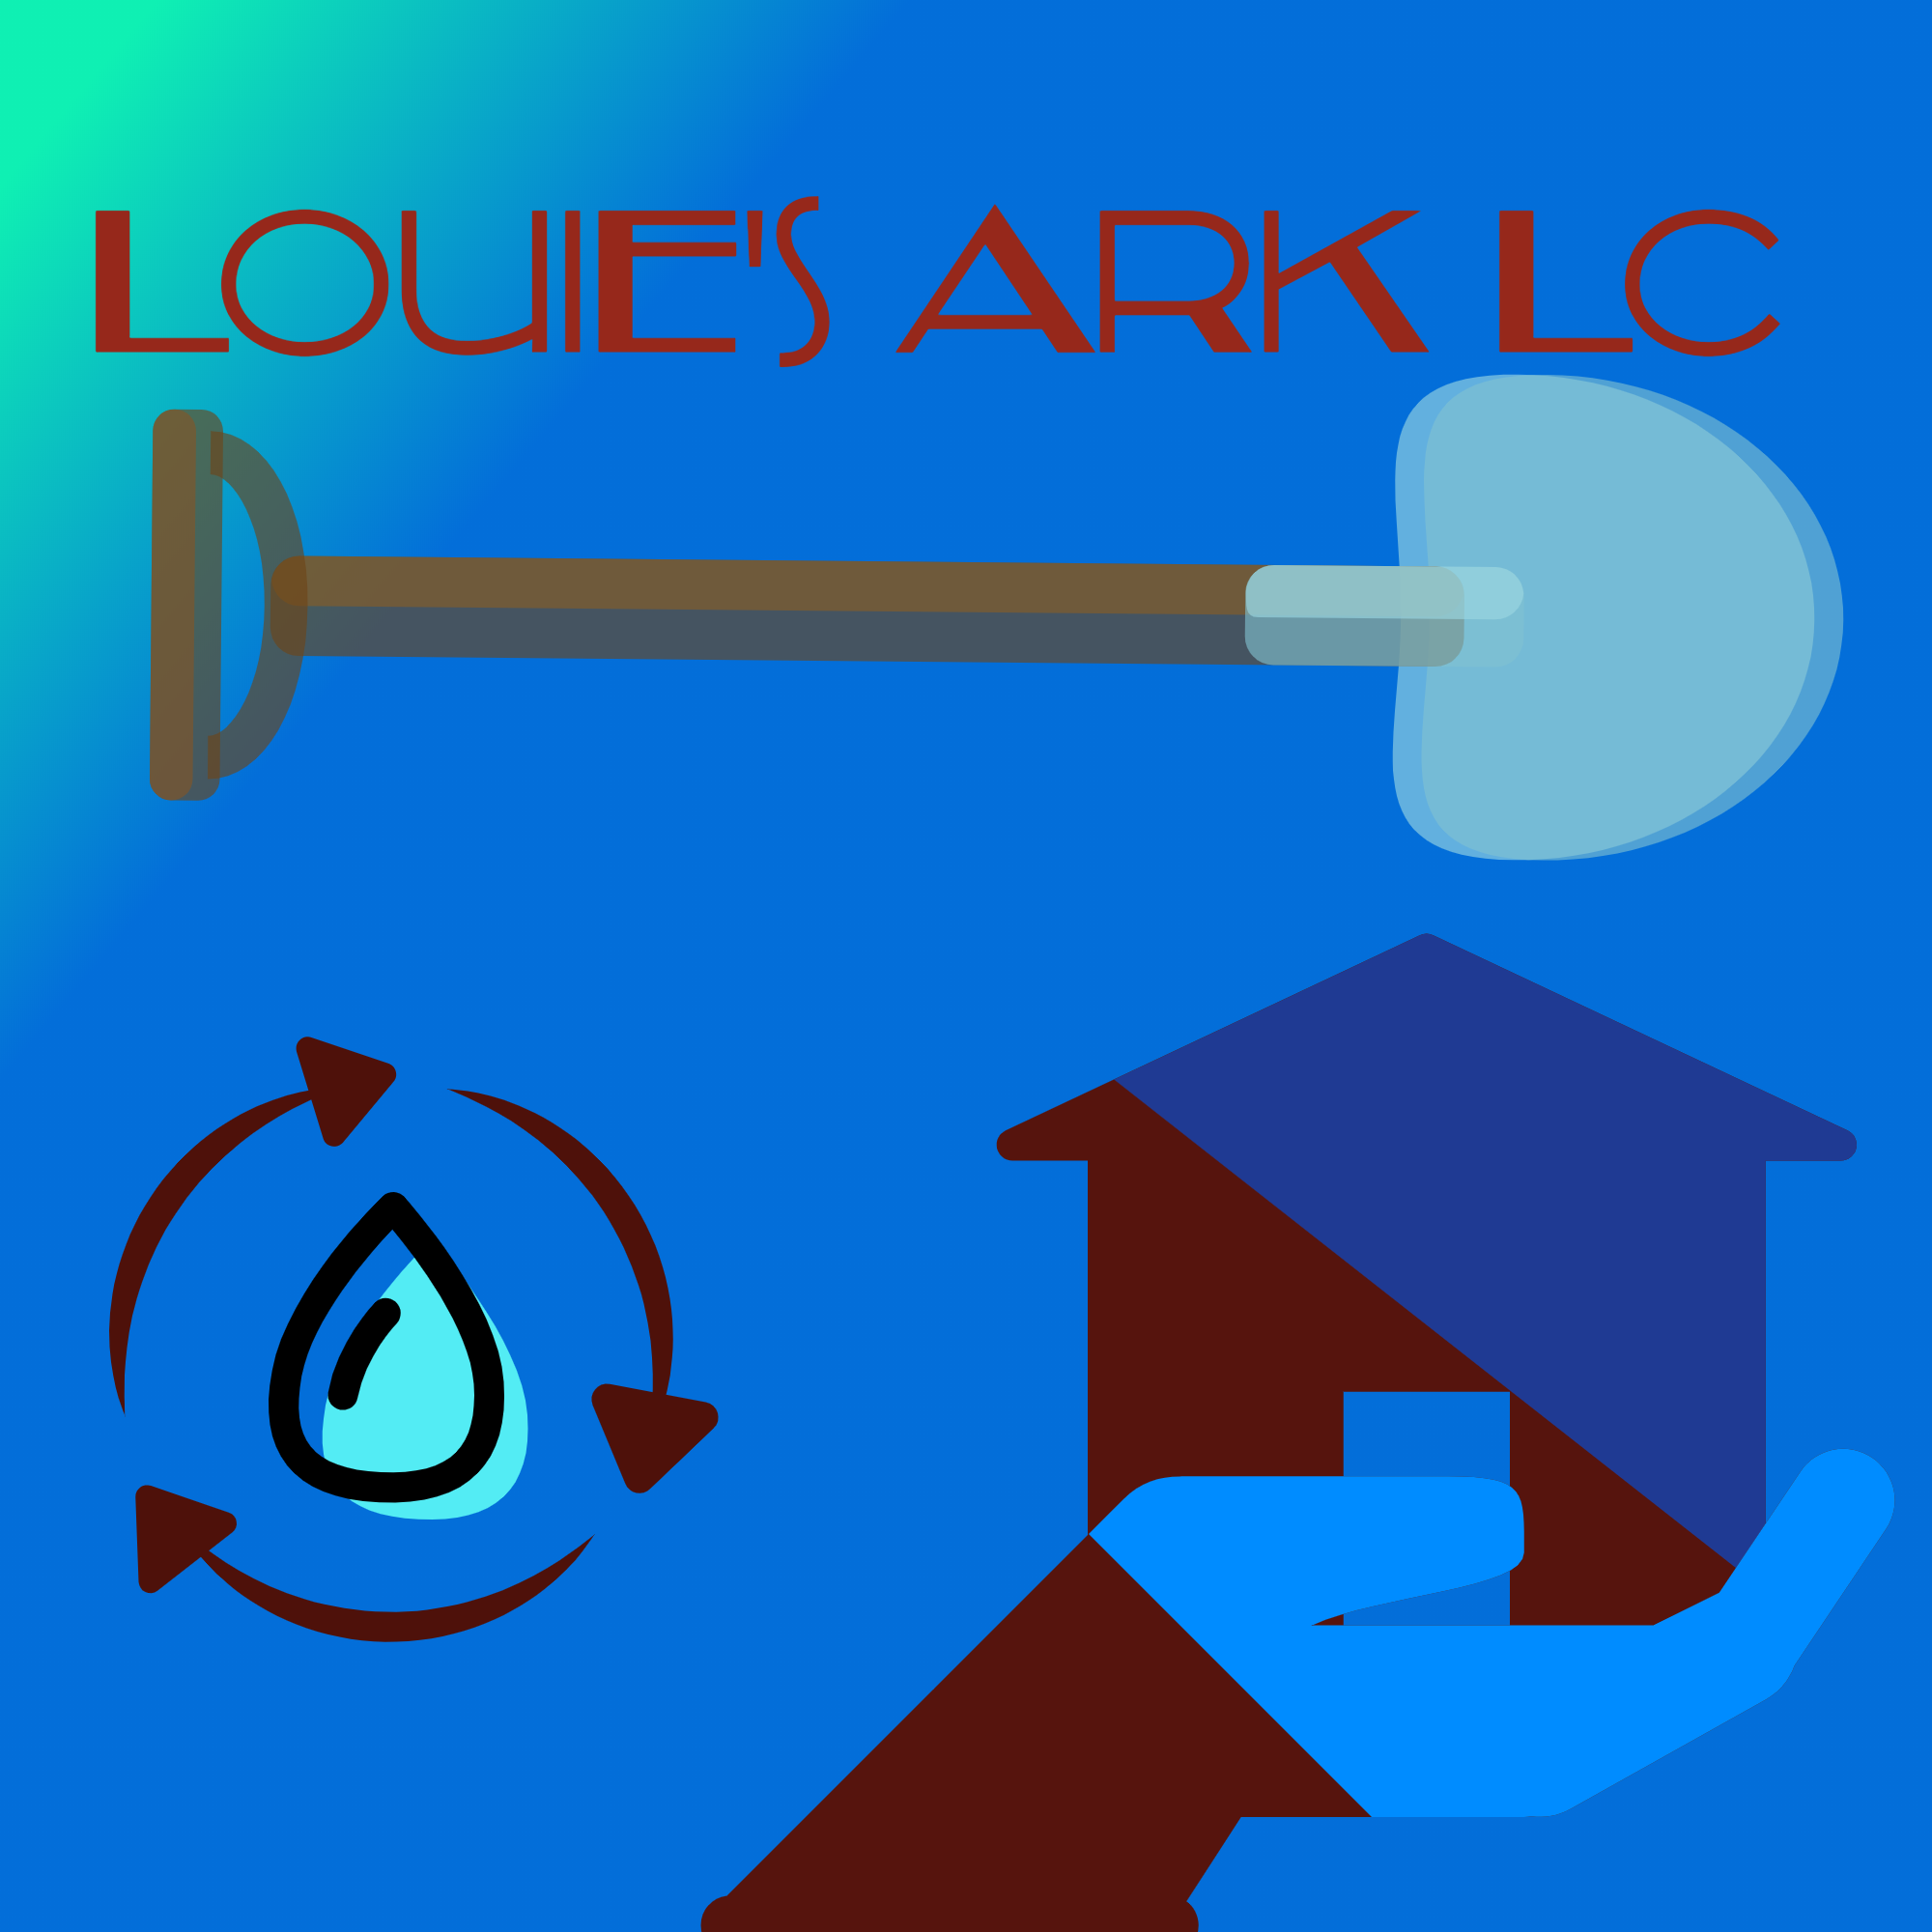 Louie's Ark, LC. Logo